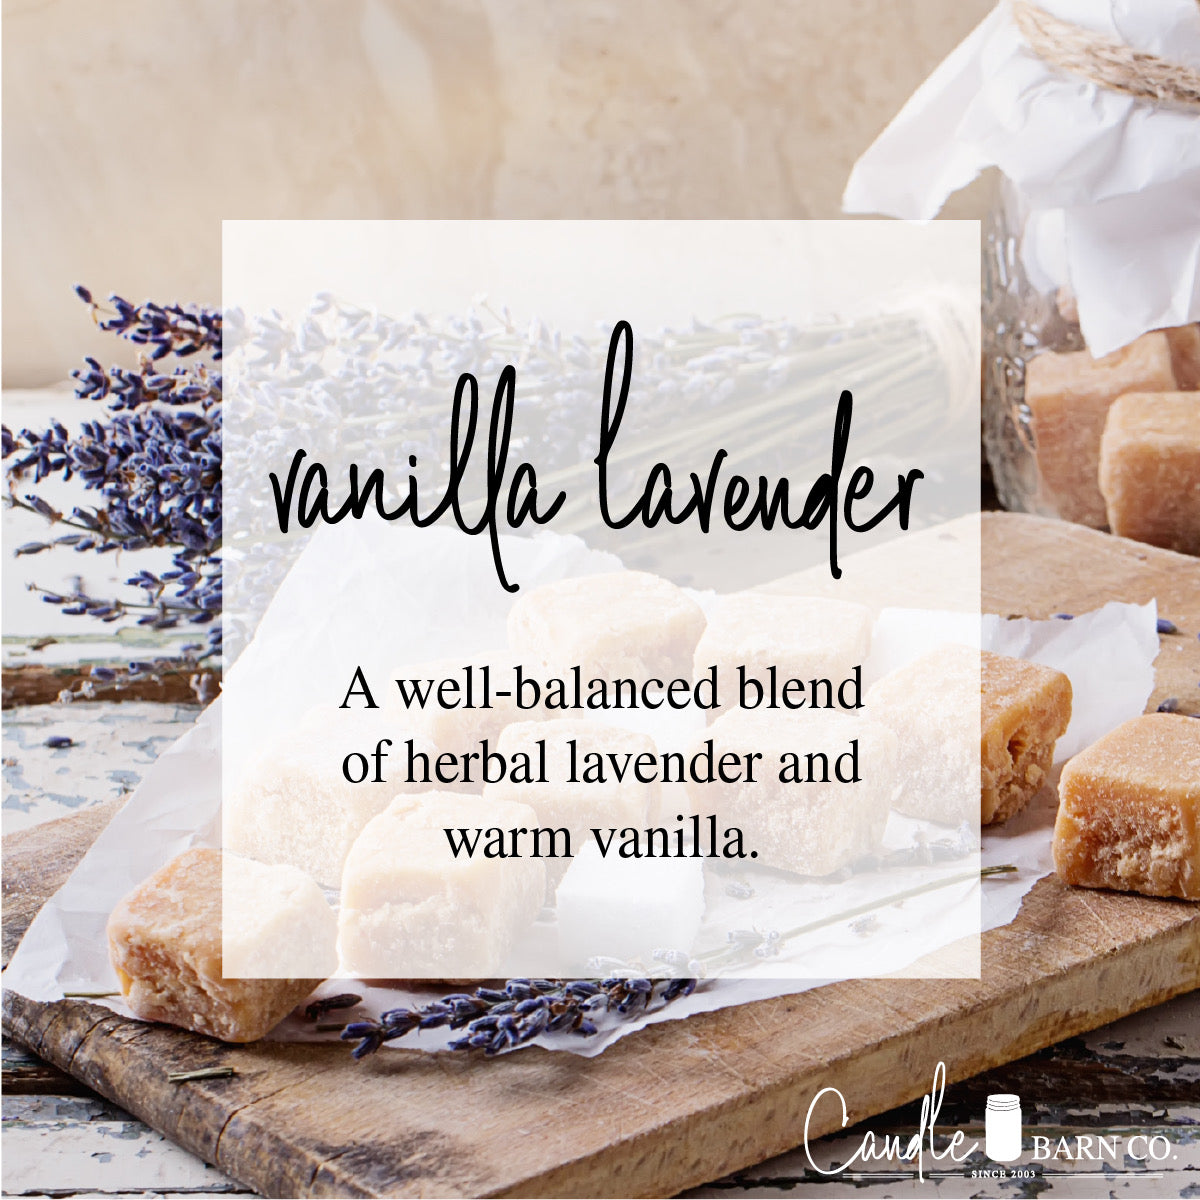 Lavender Vanilla + Herb Candle